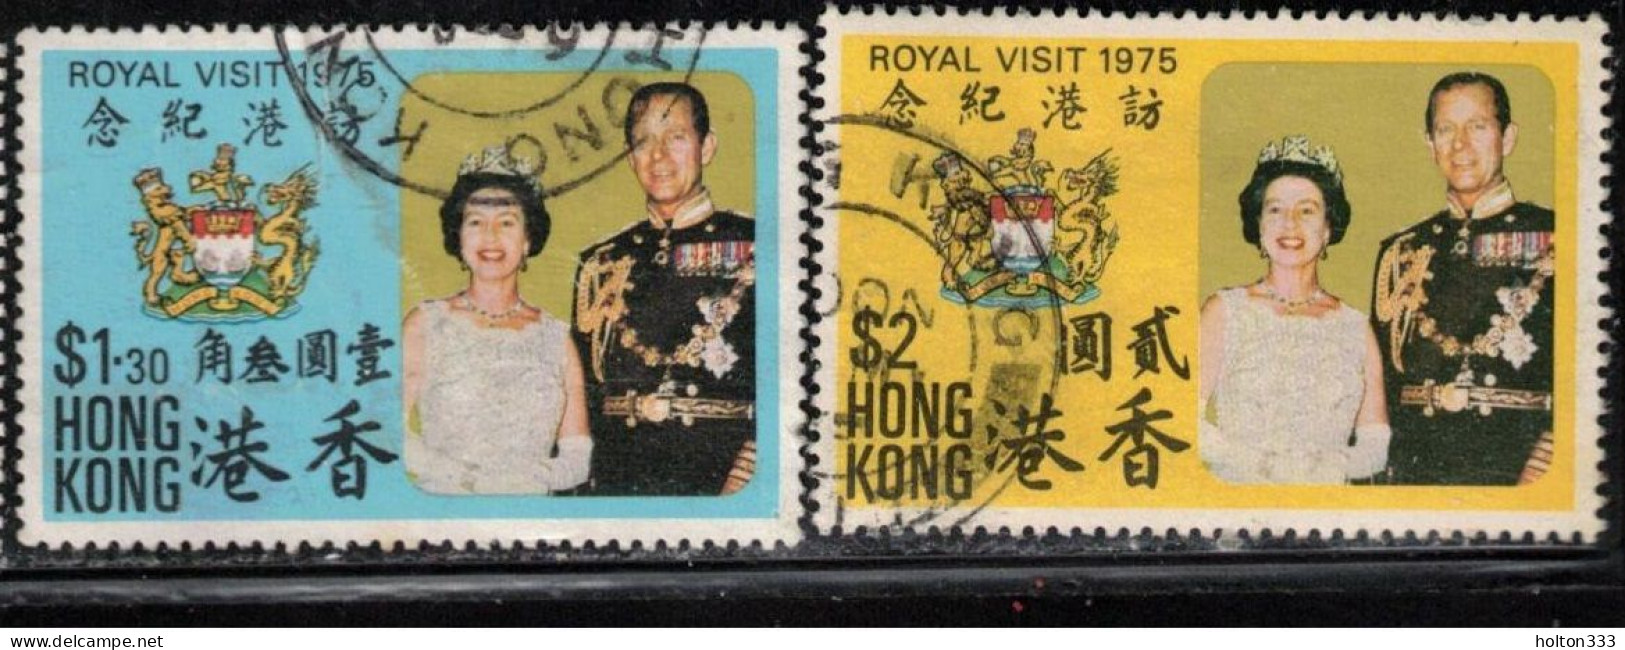 HONG KONG Scott # 304-5 Used - Royal Visit 1975 - Used Stamps